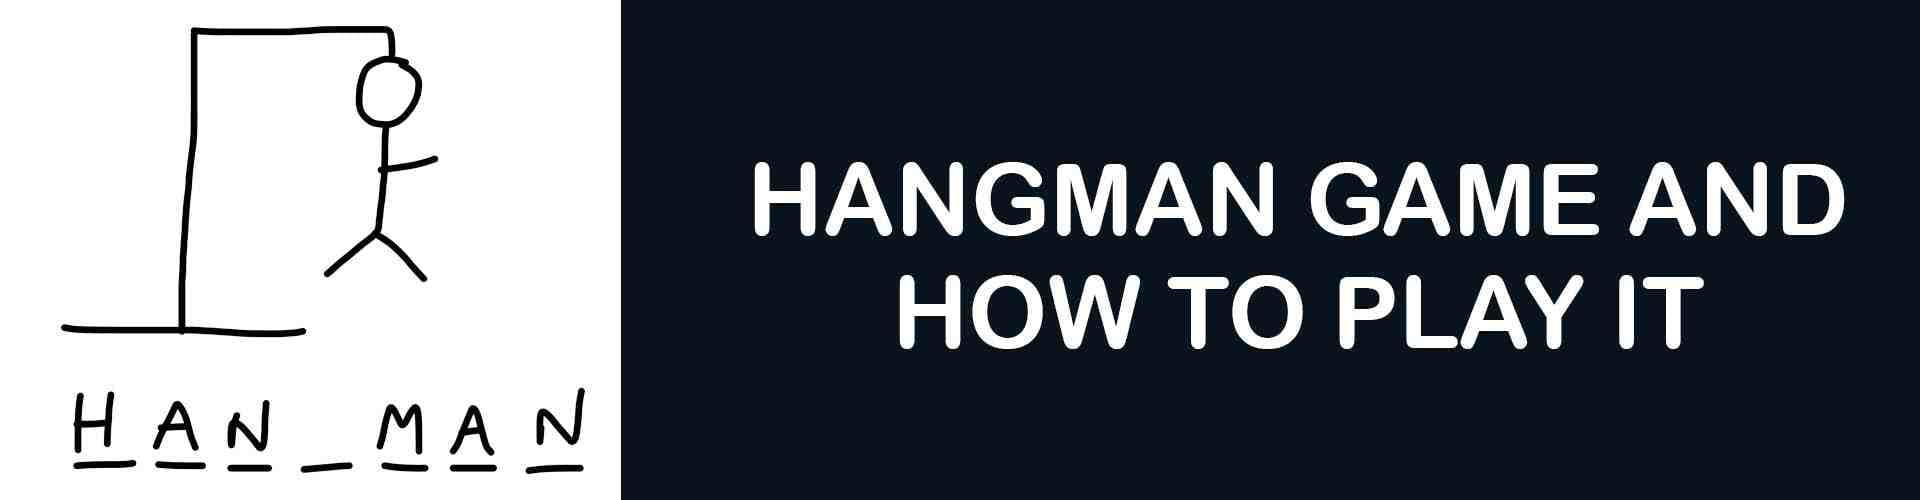 Hangman game how to play